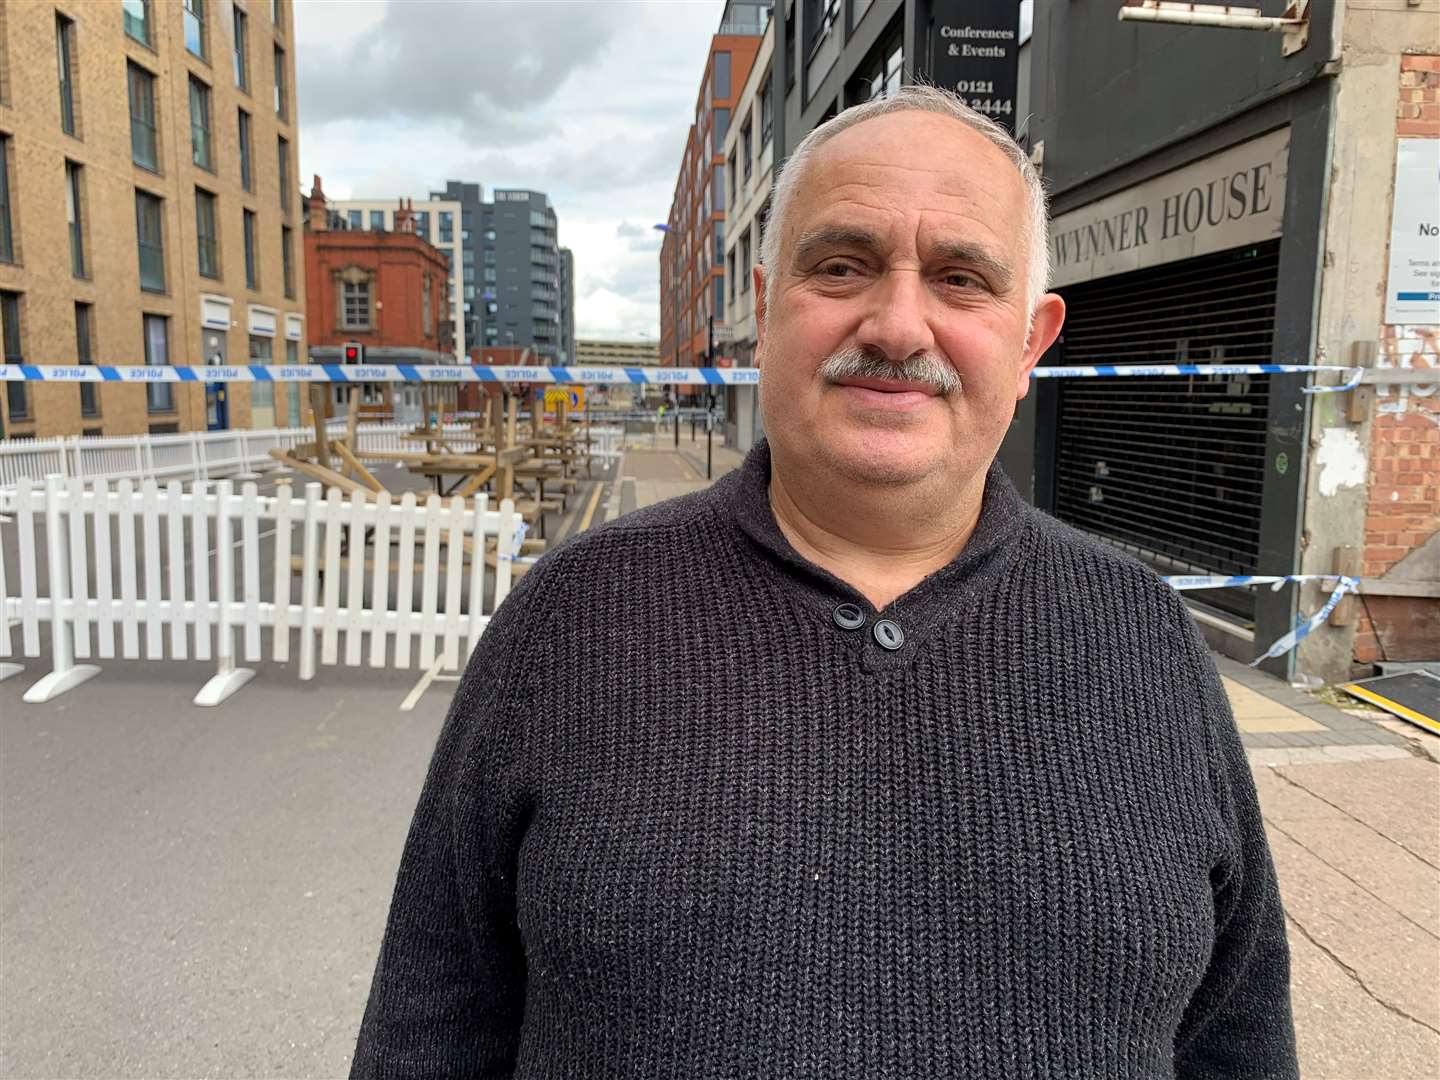 Bar and grill owner Savvas Sfrantzis witnessed one of the attacks unfolding in Hurst Street, Birmingham (Richard Vernalls/PA)